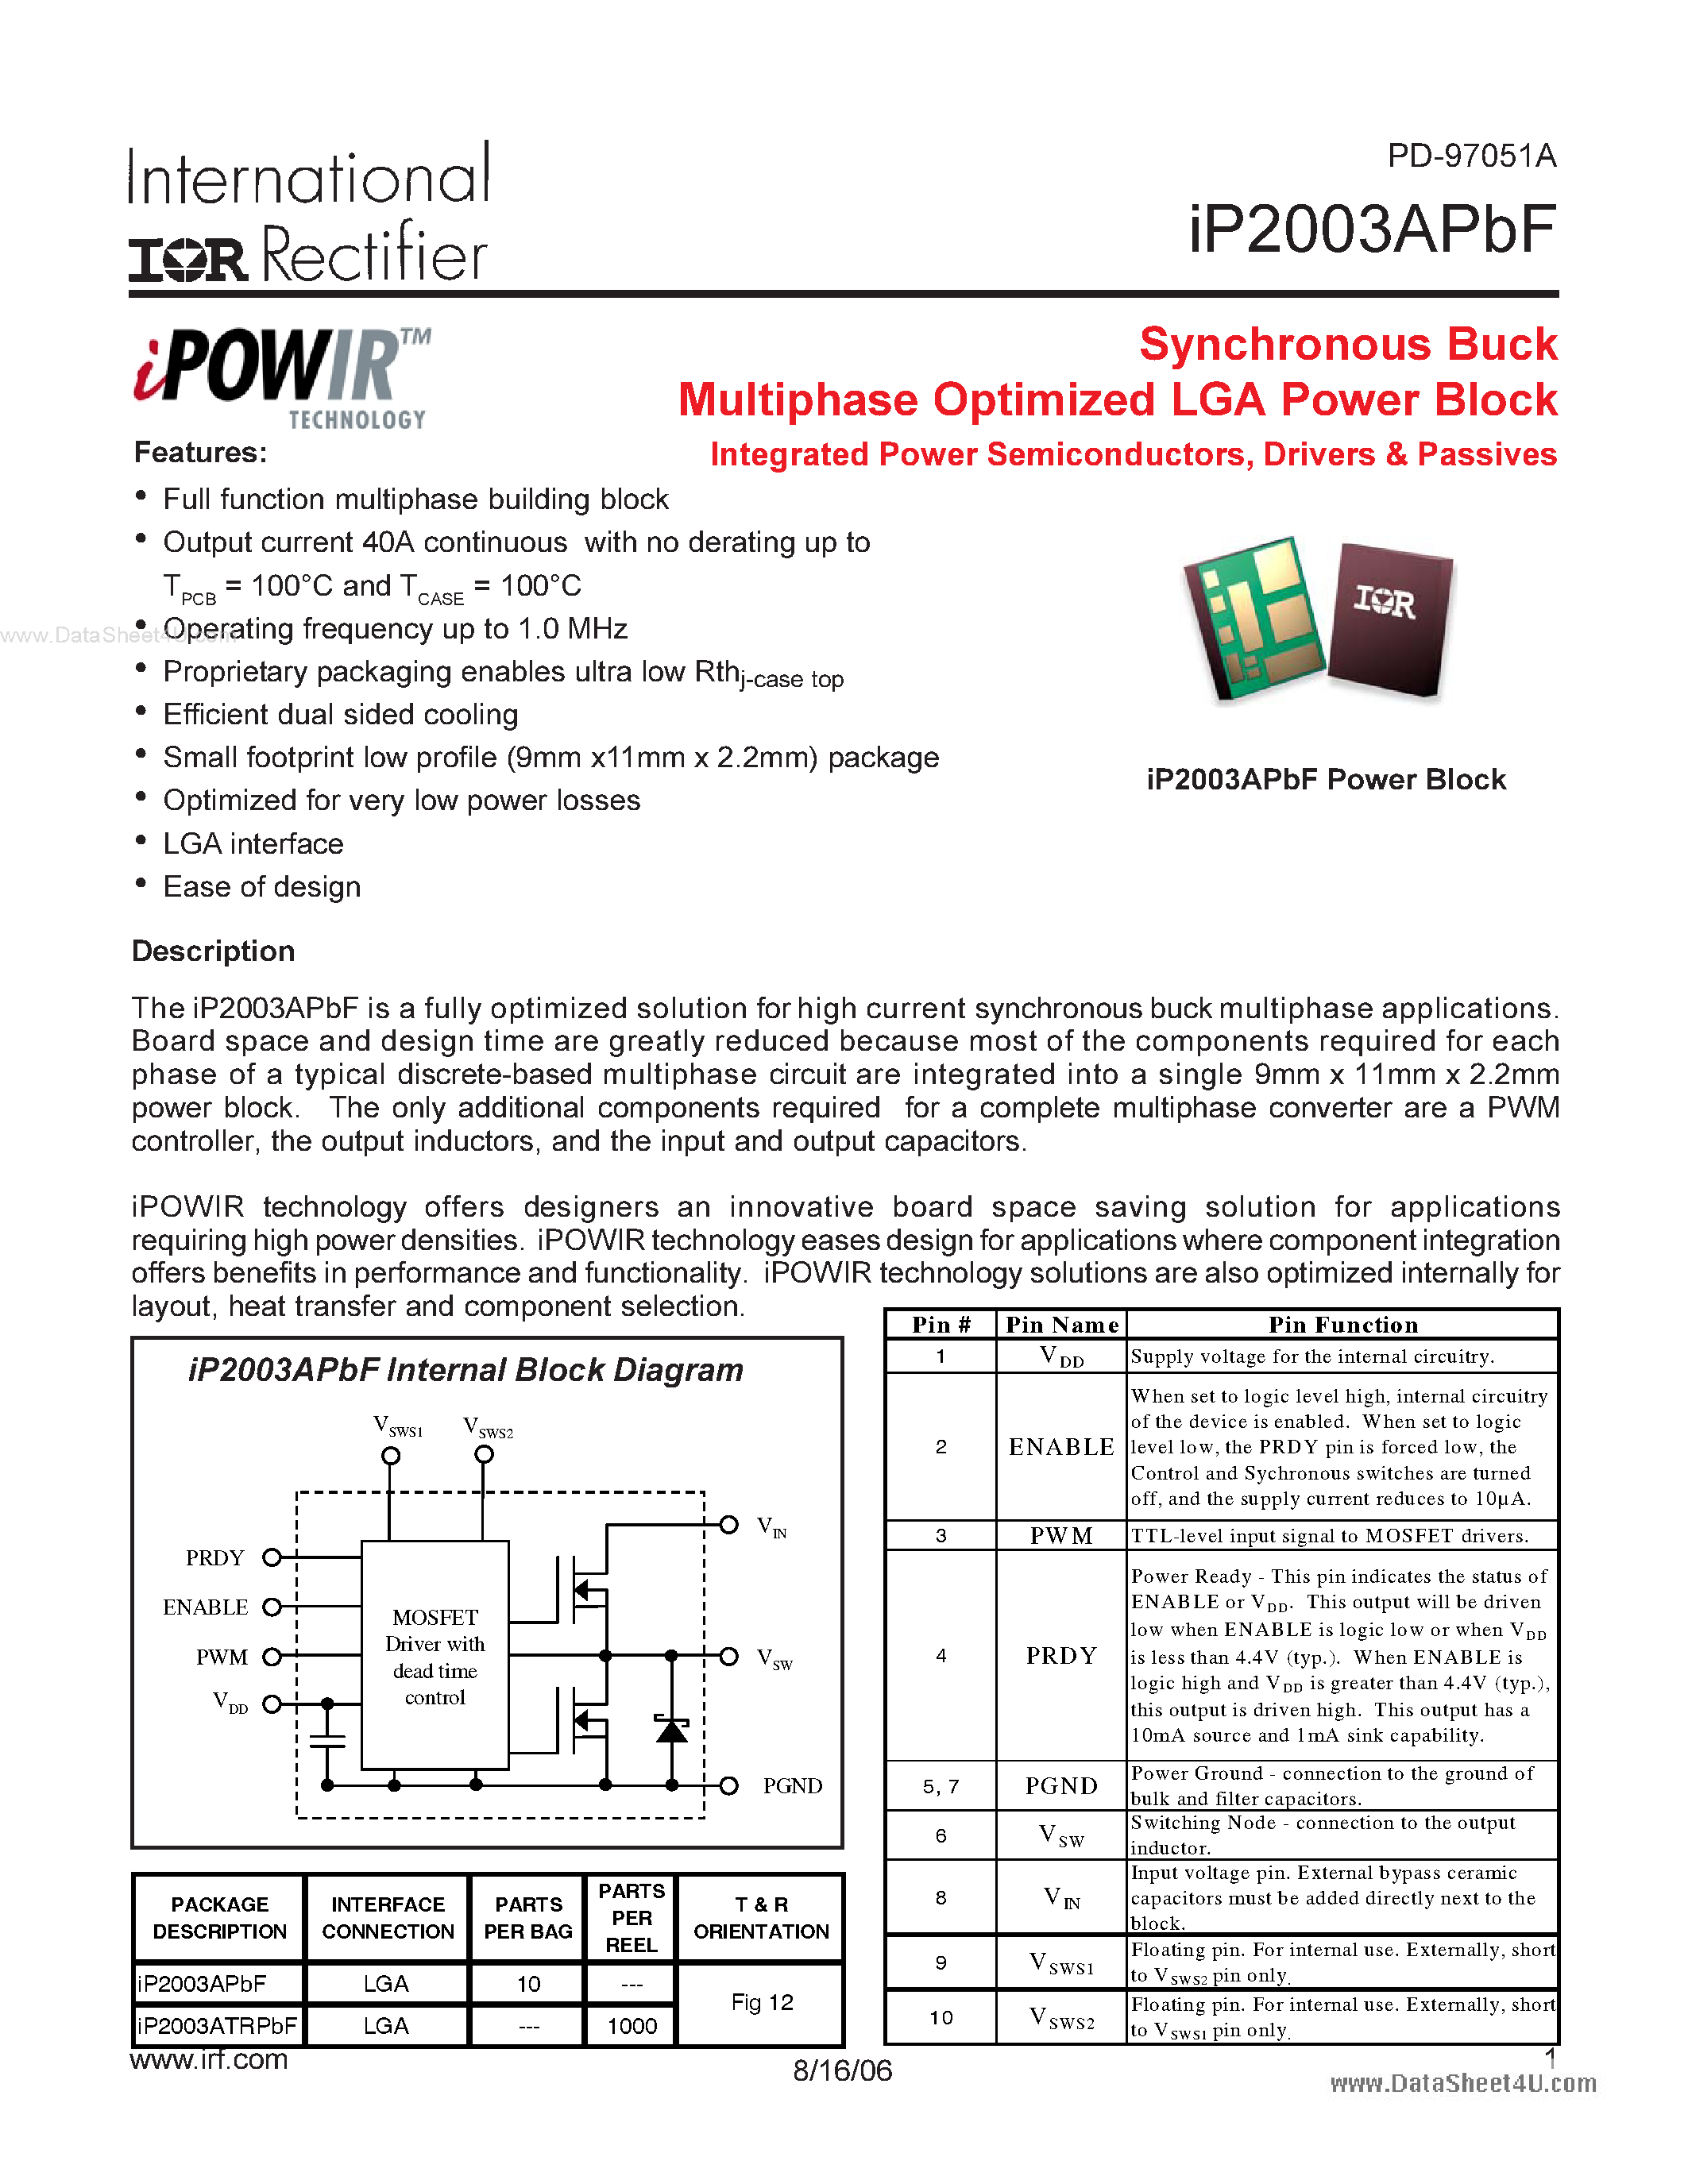 Datasheet IP2003APBF - Synchronous Buck Multiphase Optimized LGA Power Block Intergrated Power Semiconductors page 1